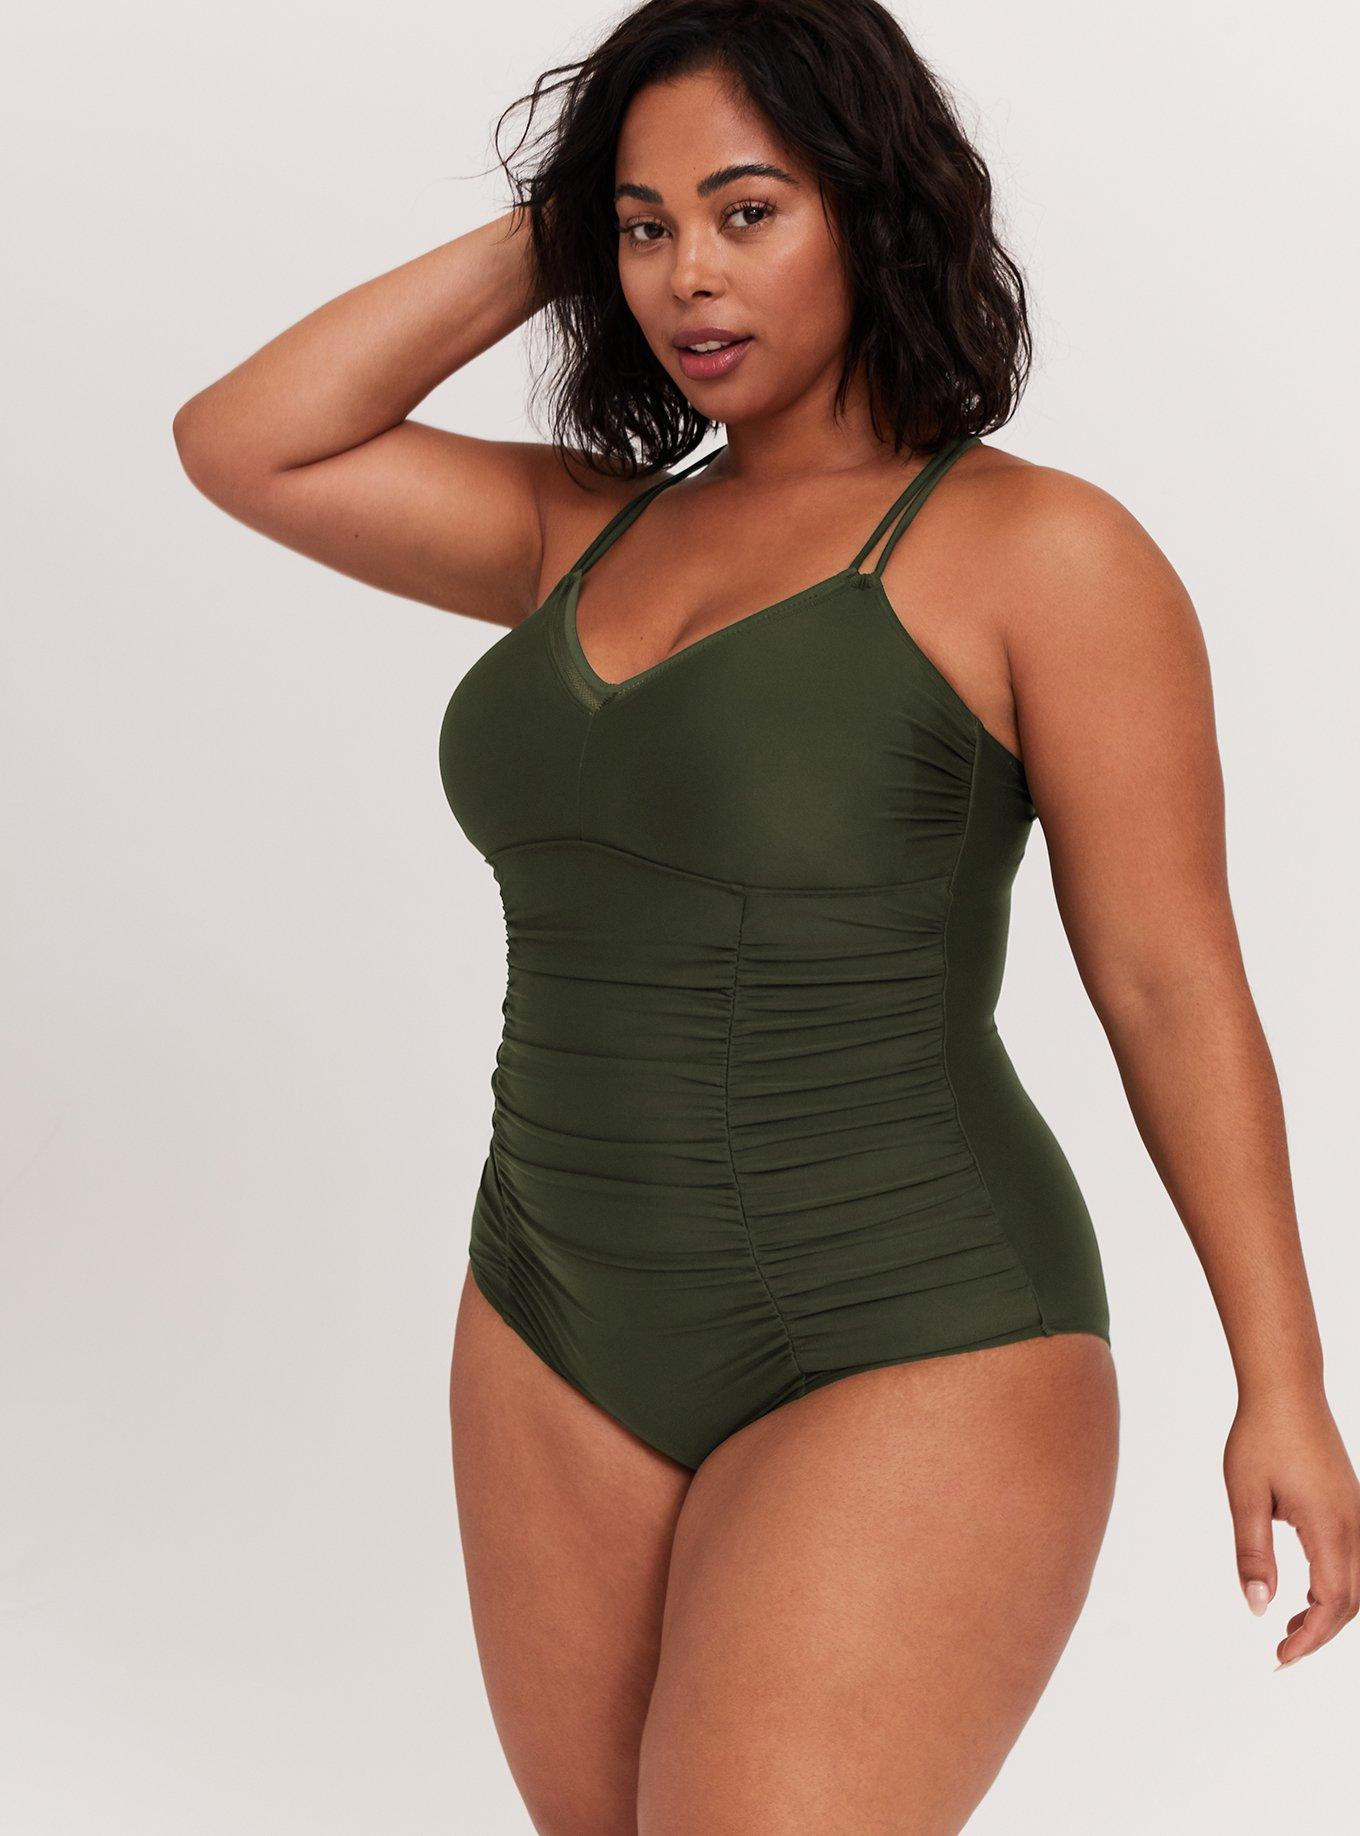  Women Green Plus Size One Piece Swimsuits Tummy